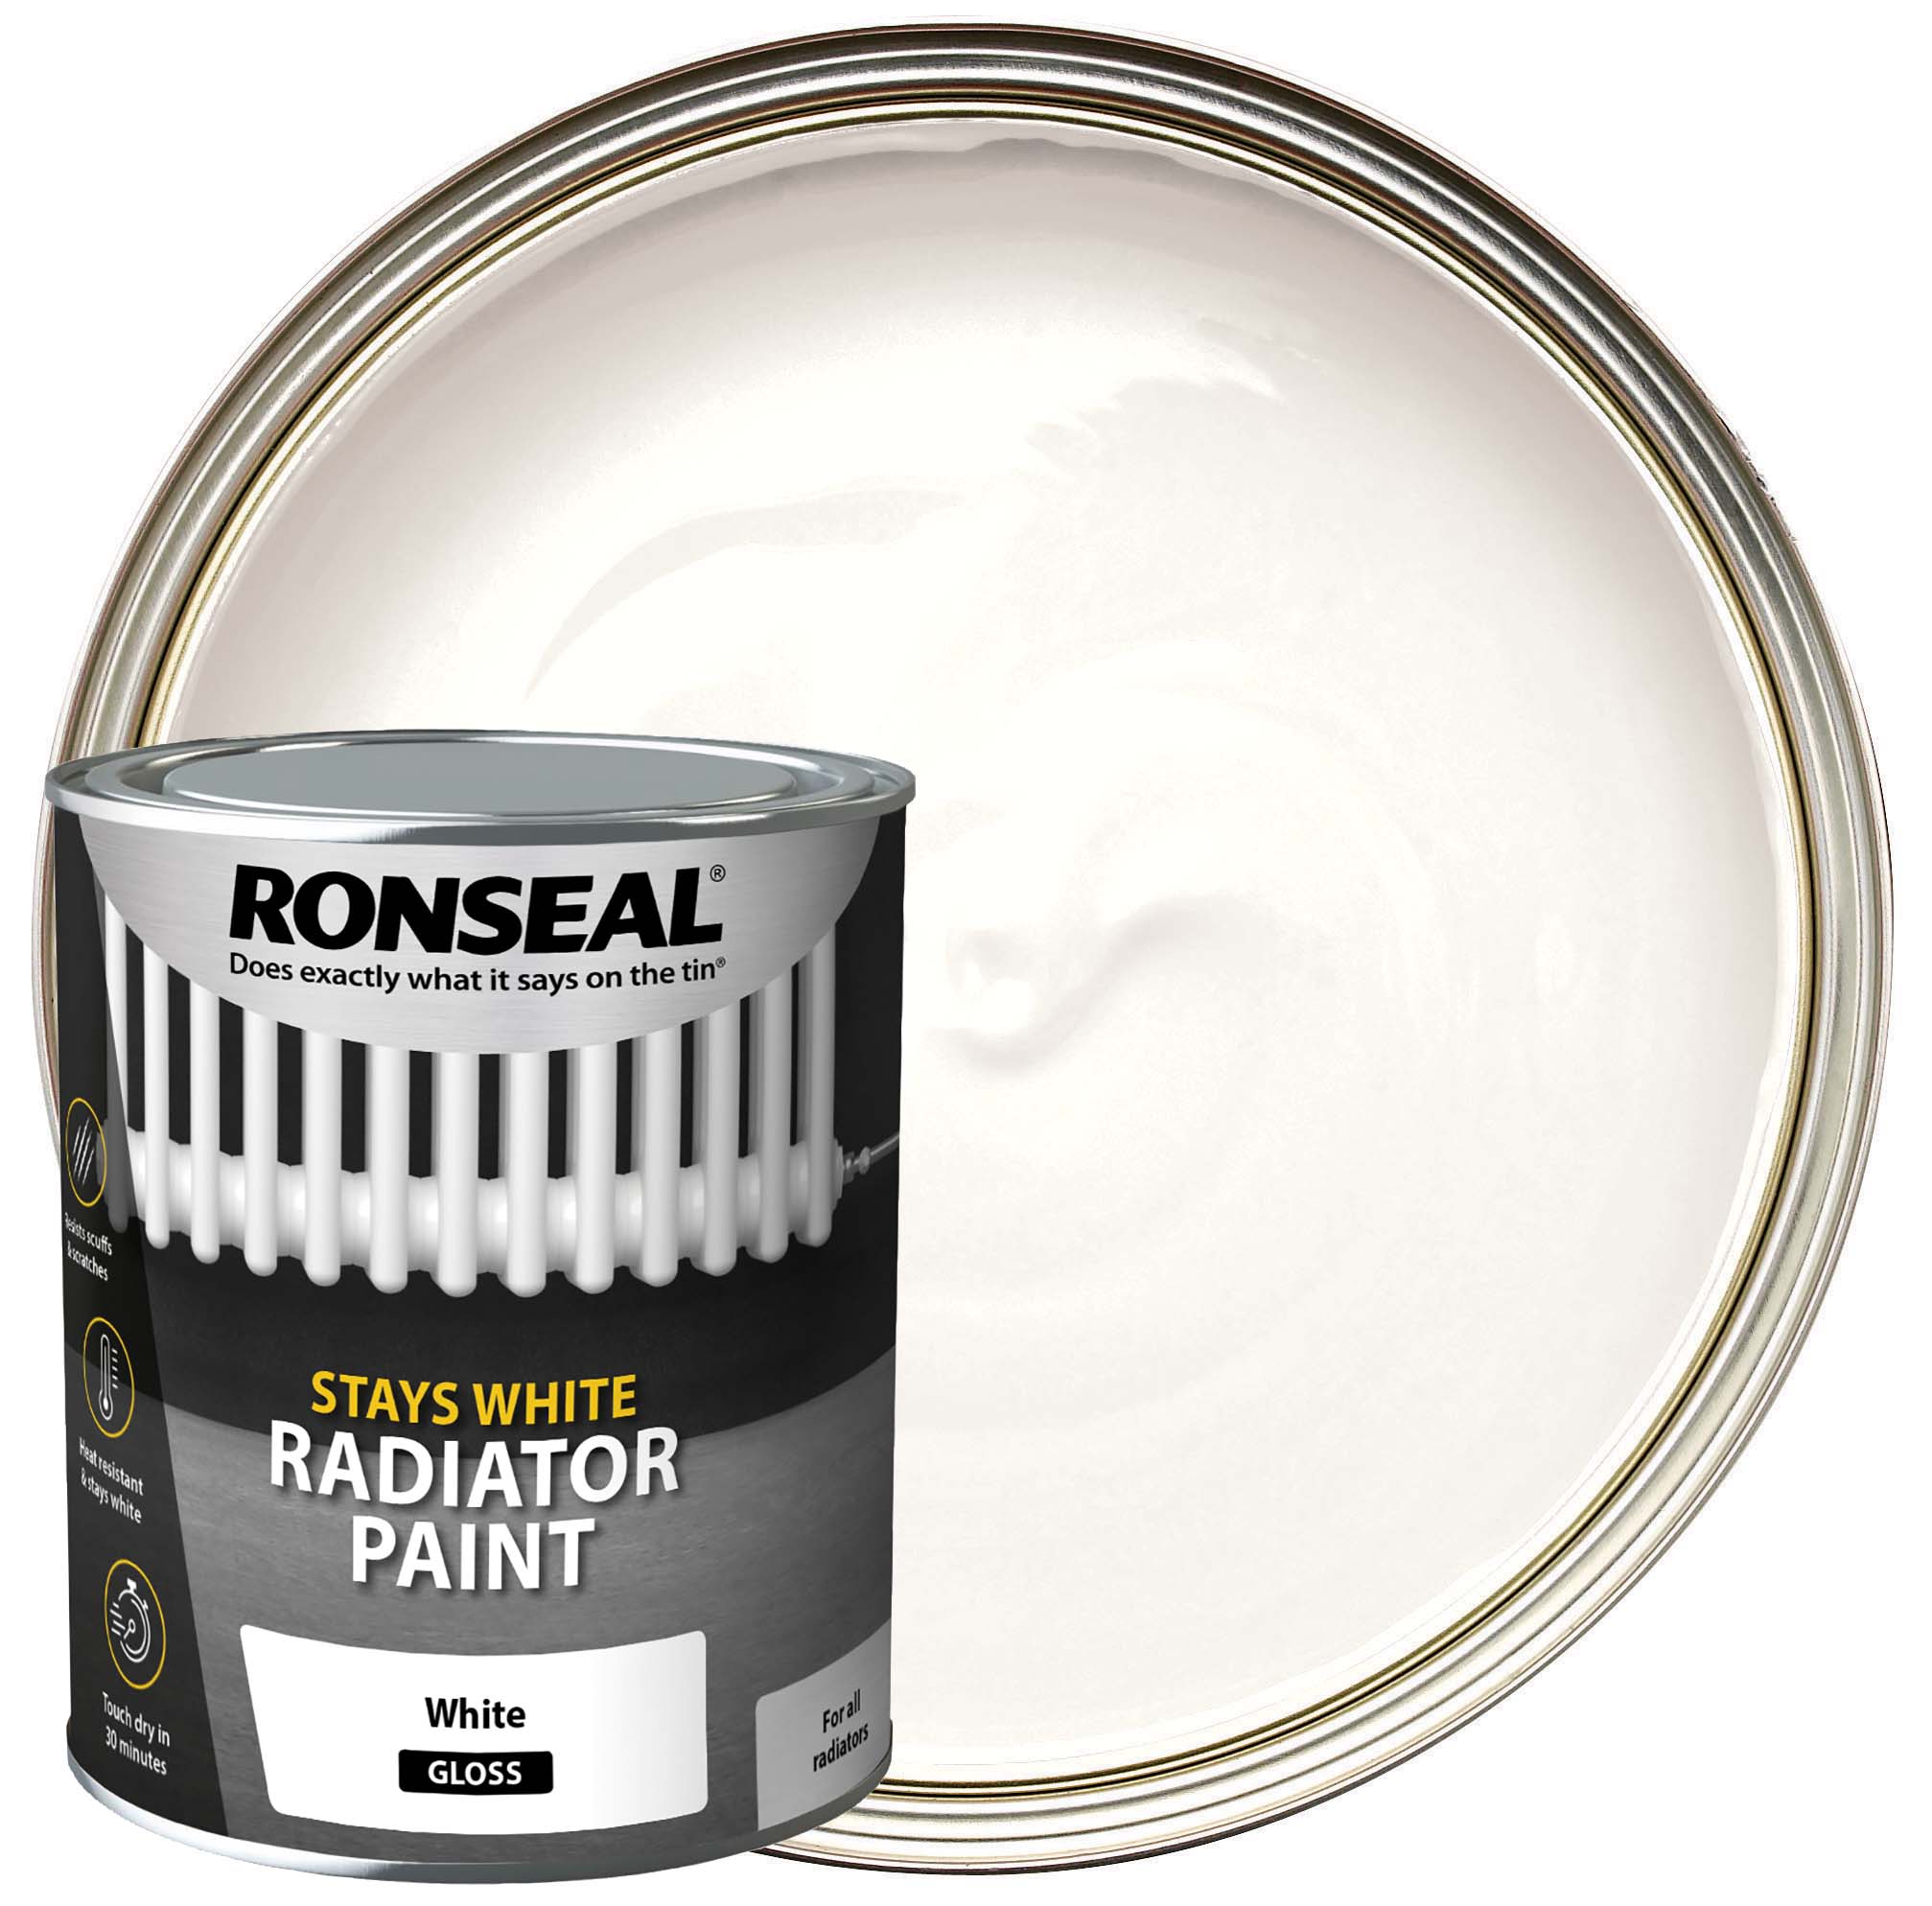 Image of Ronseal Stays White Radiator Paint White Gloss 750ml